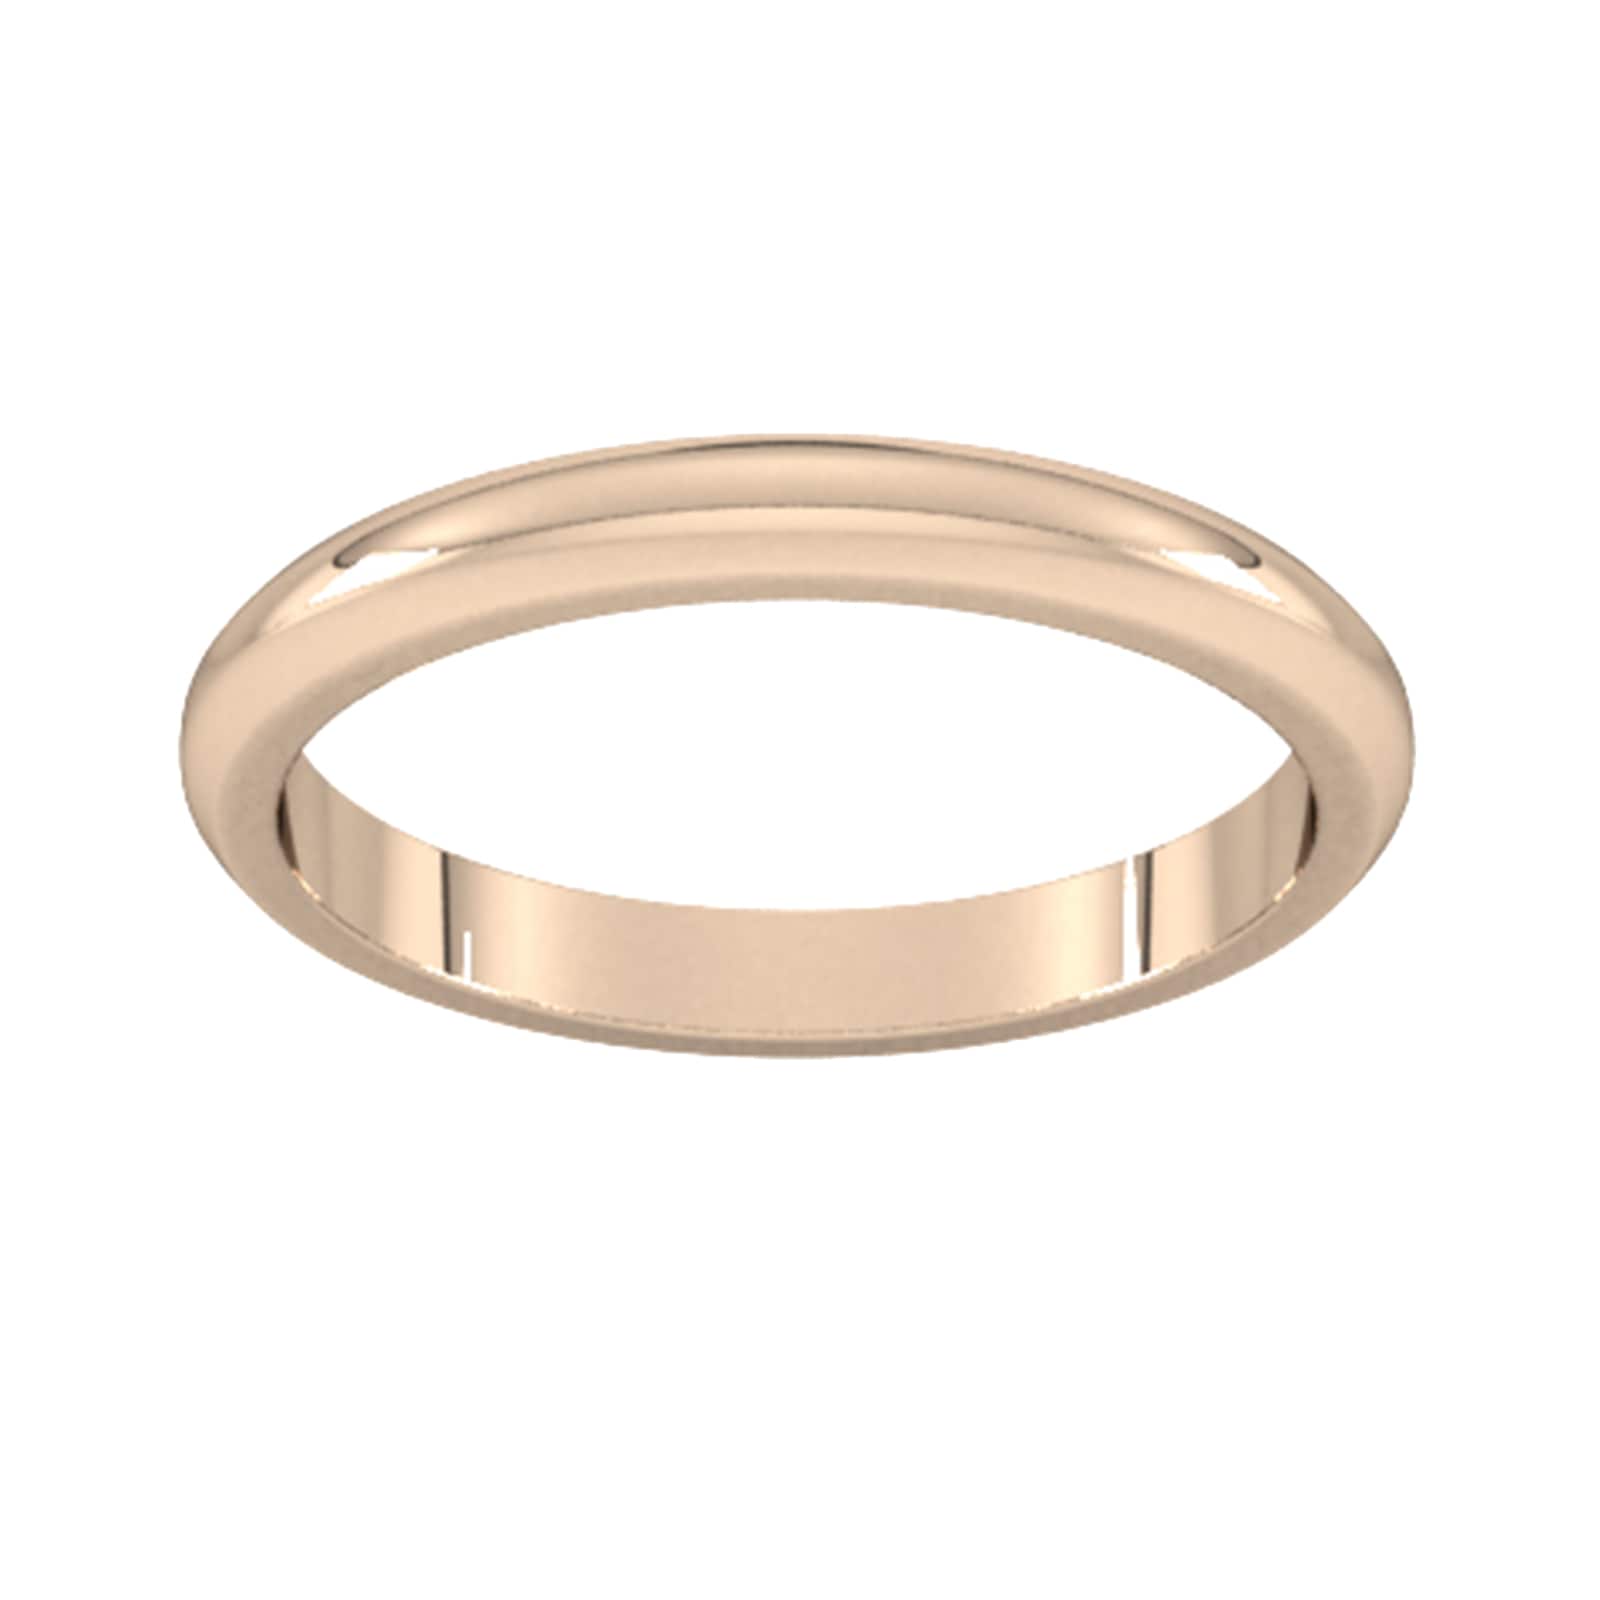 2.5mm D Shape Heavy Wedding Ring In 18 Carat Rose Gold - Ring Size U